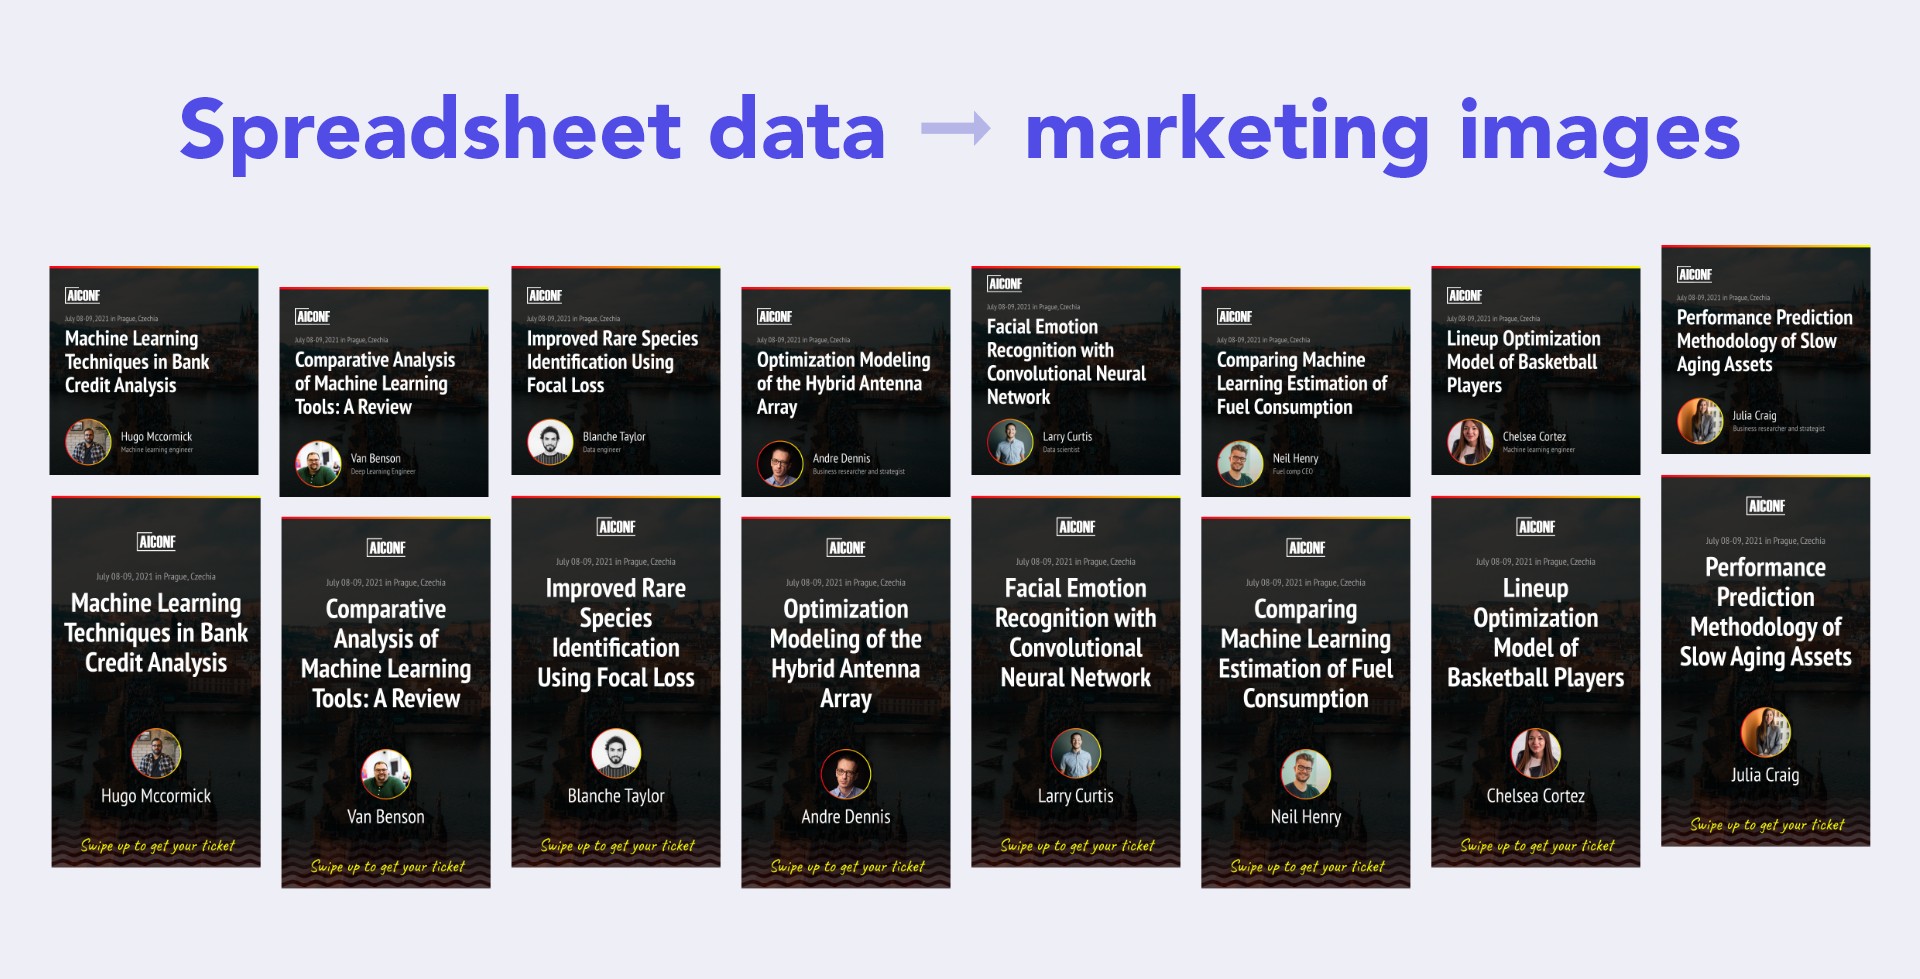 Turn spreadsheet data into marketing images